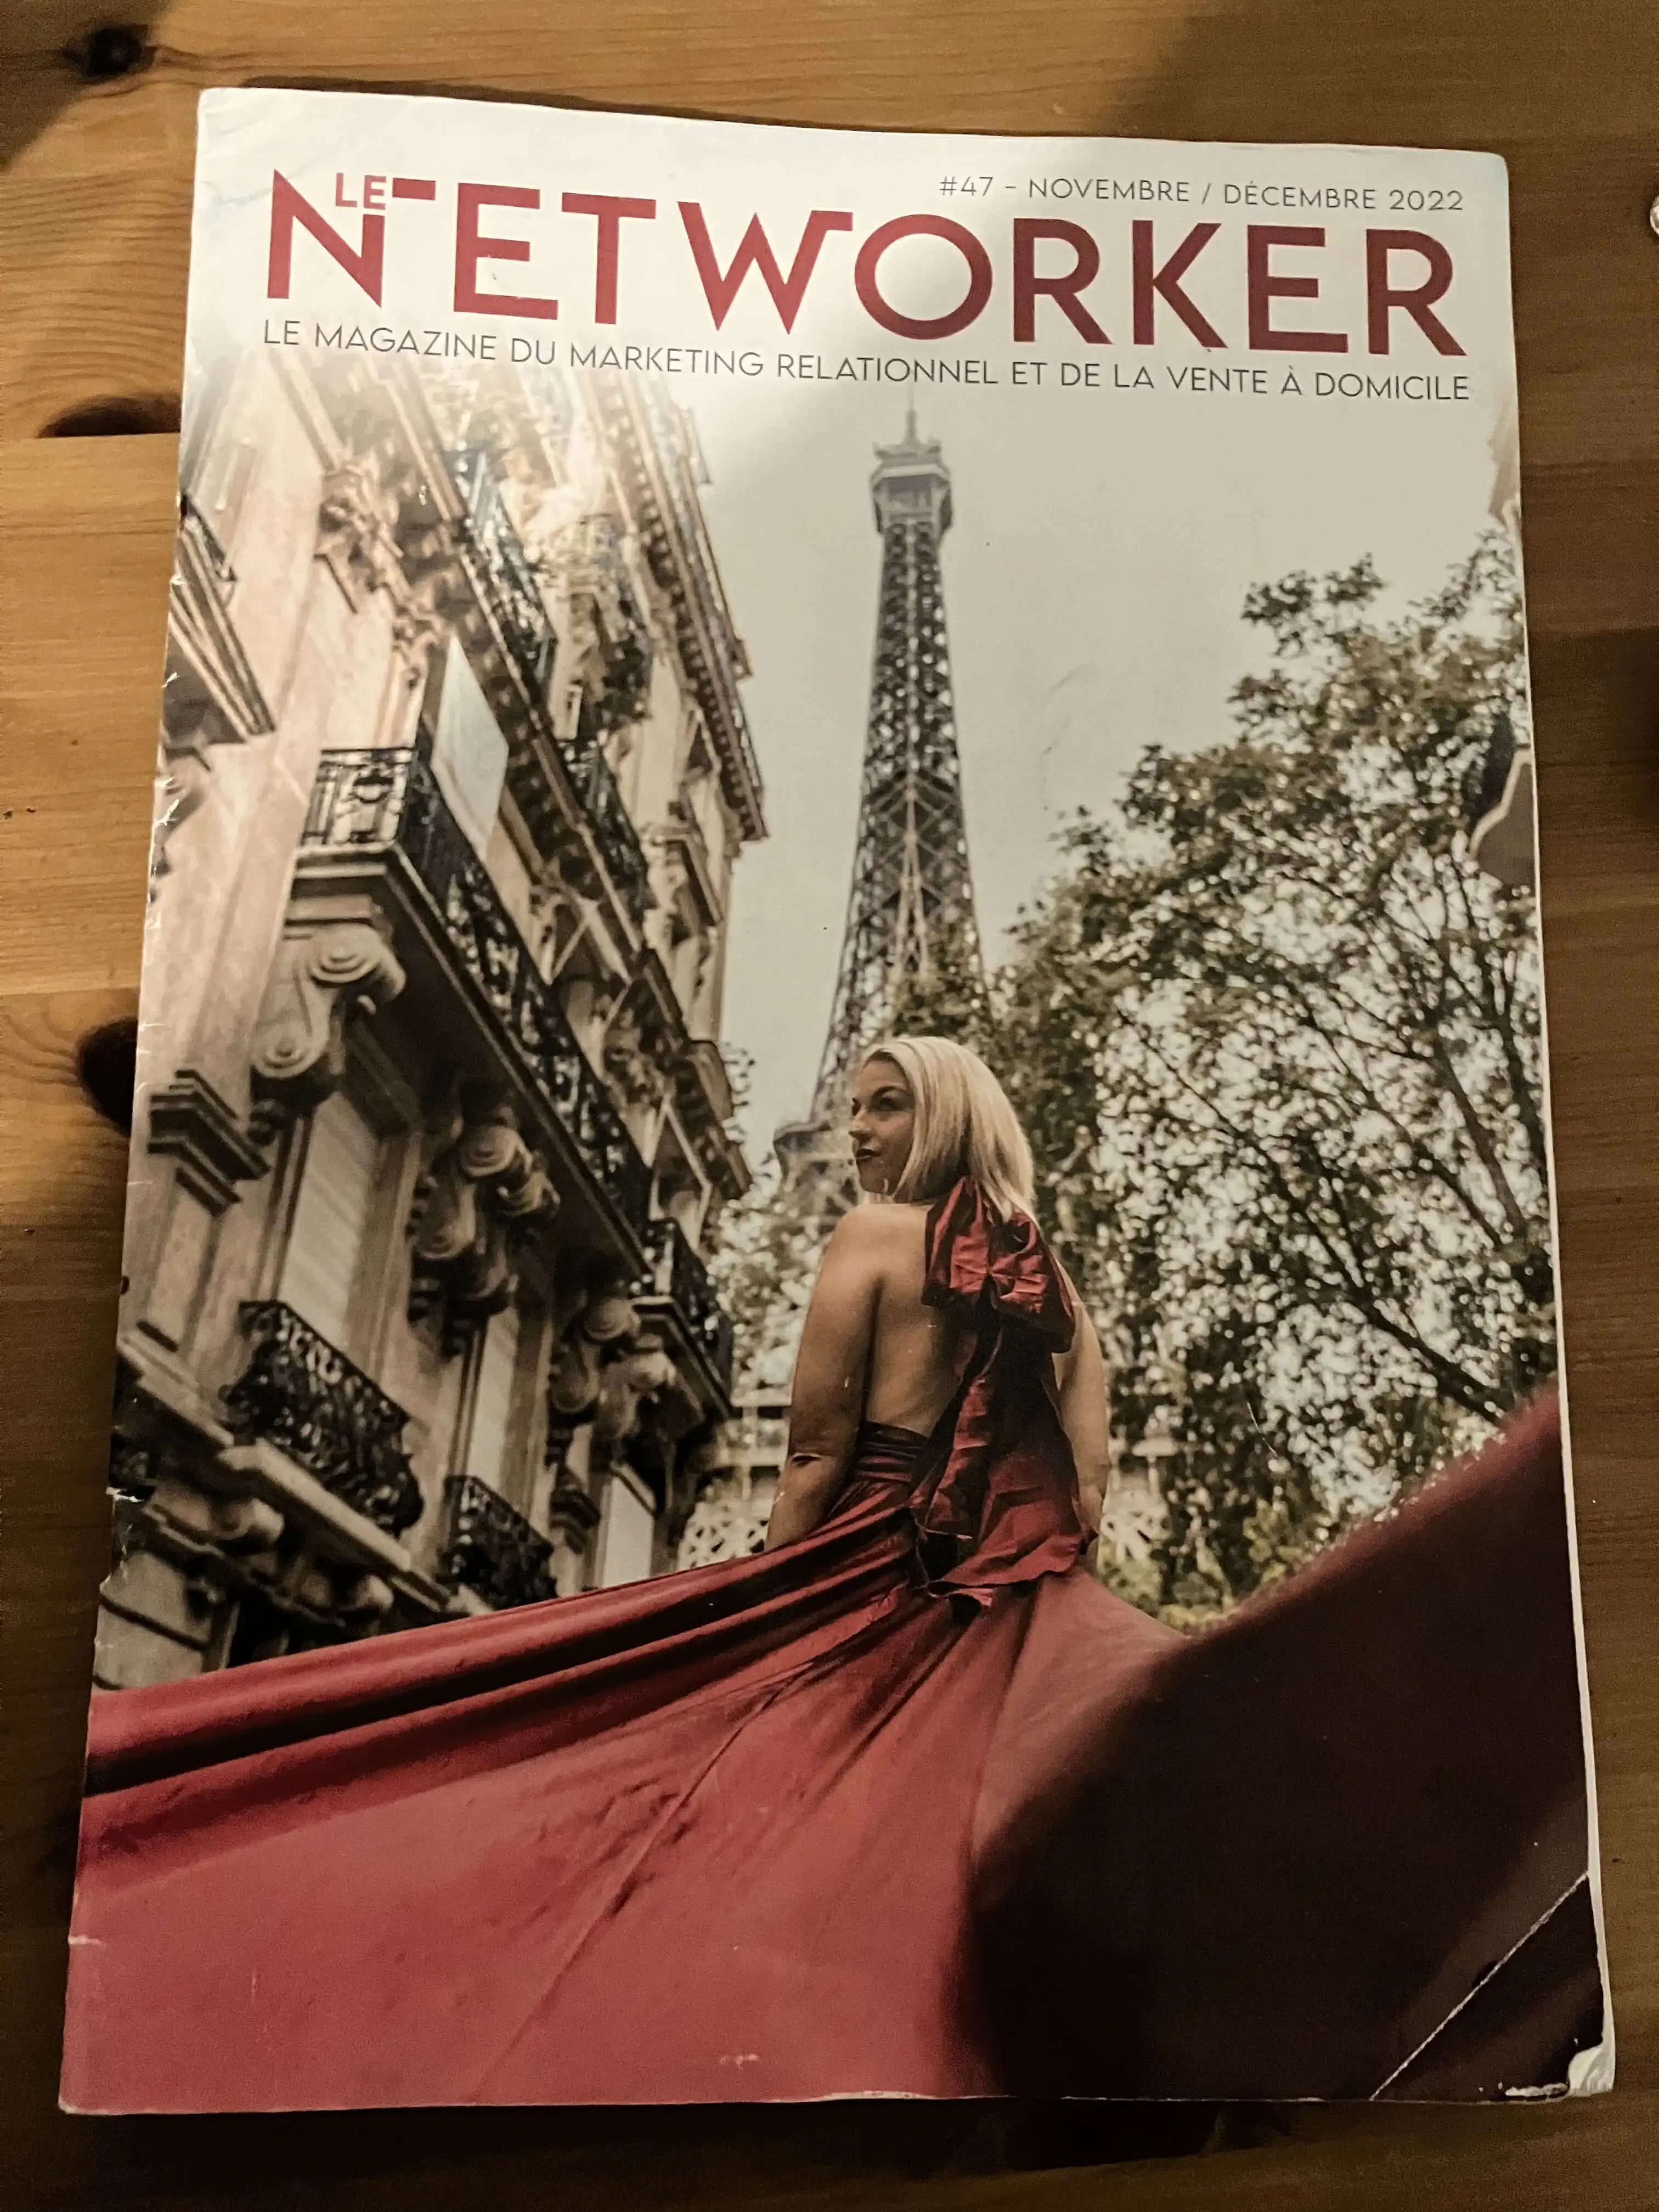 networker magazine couverture